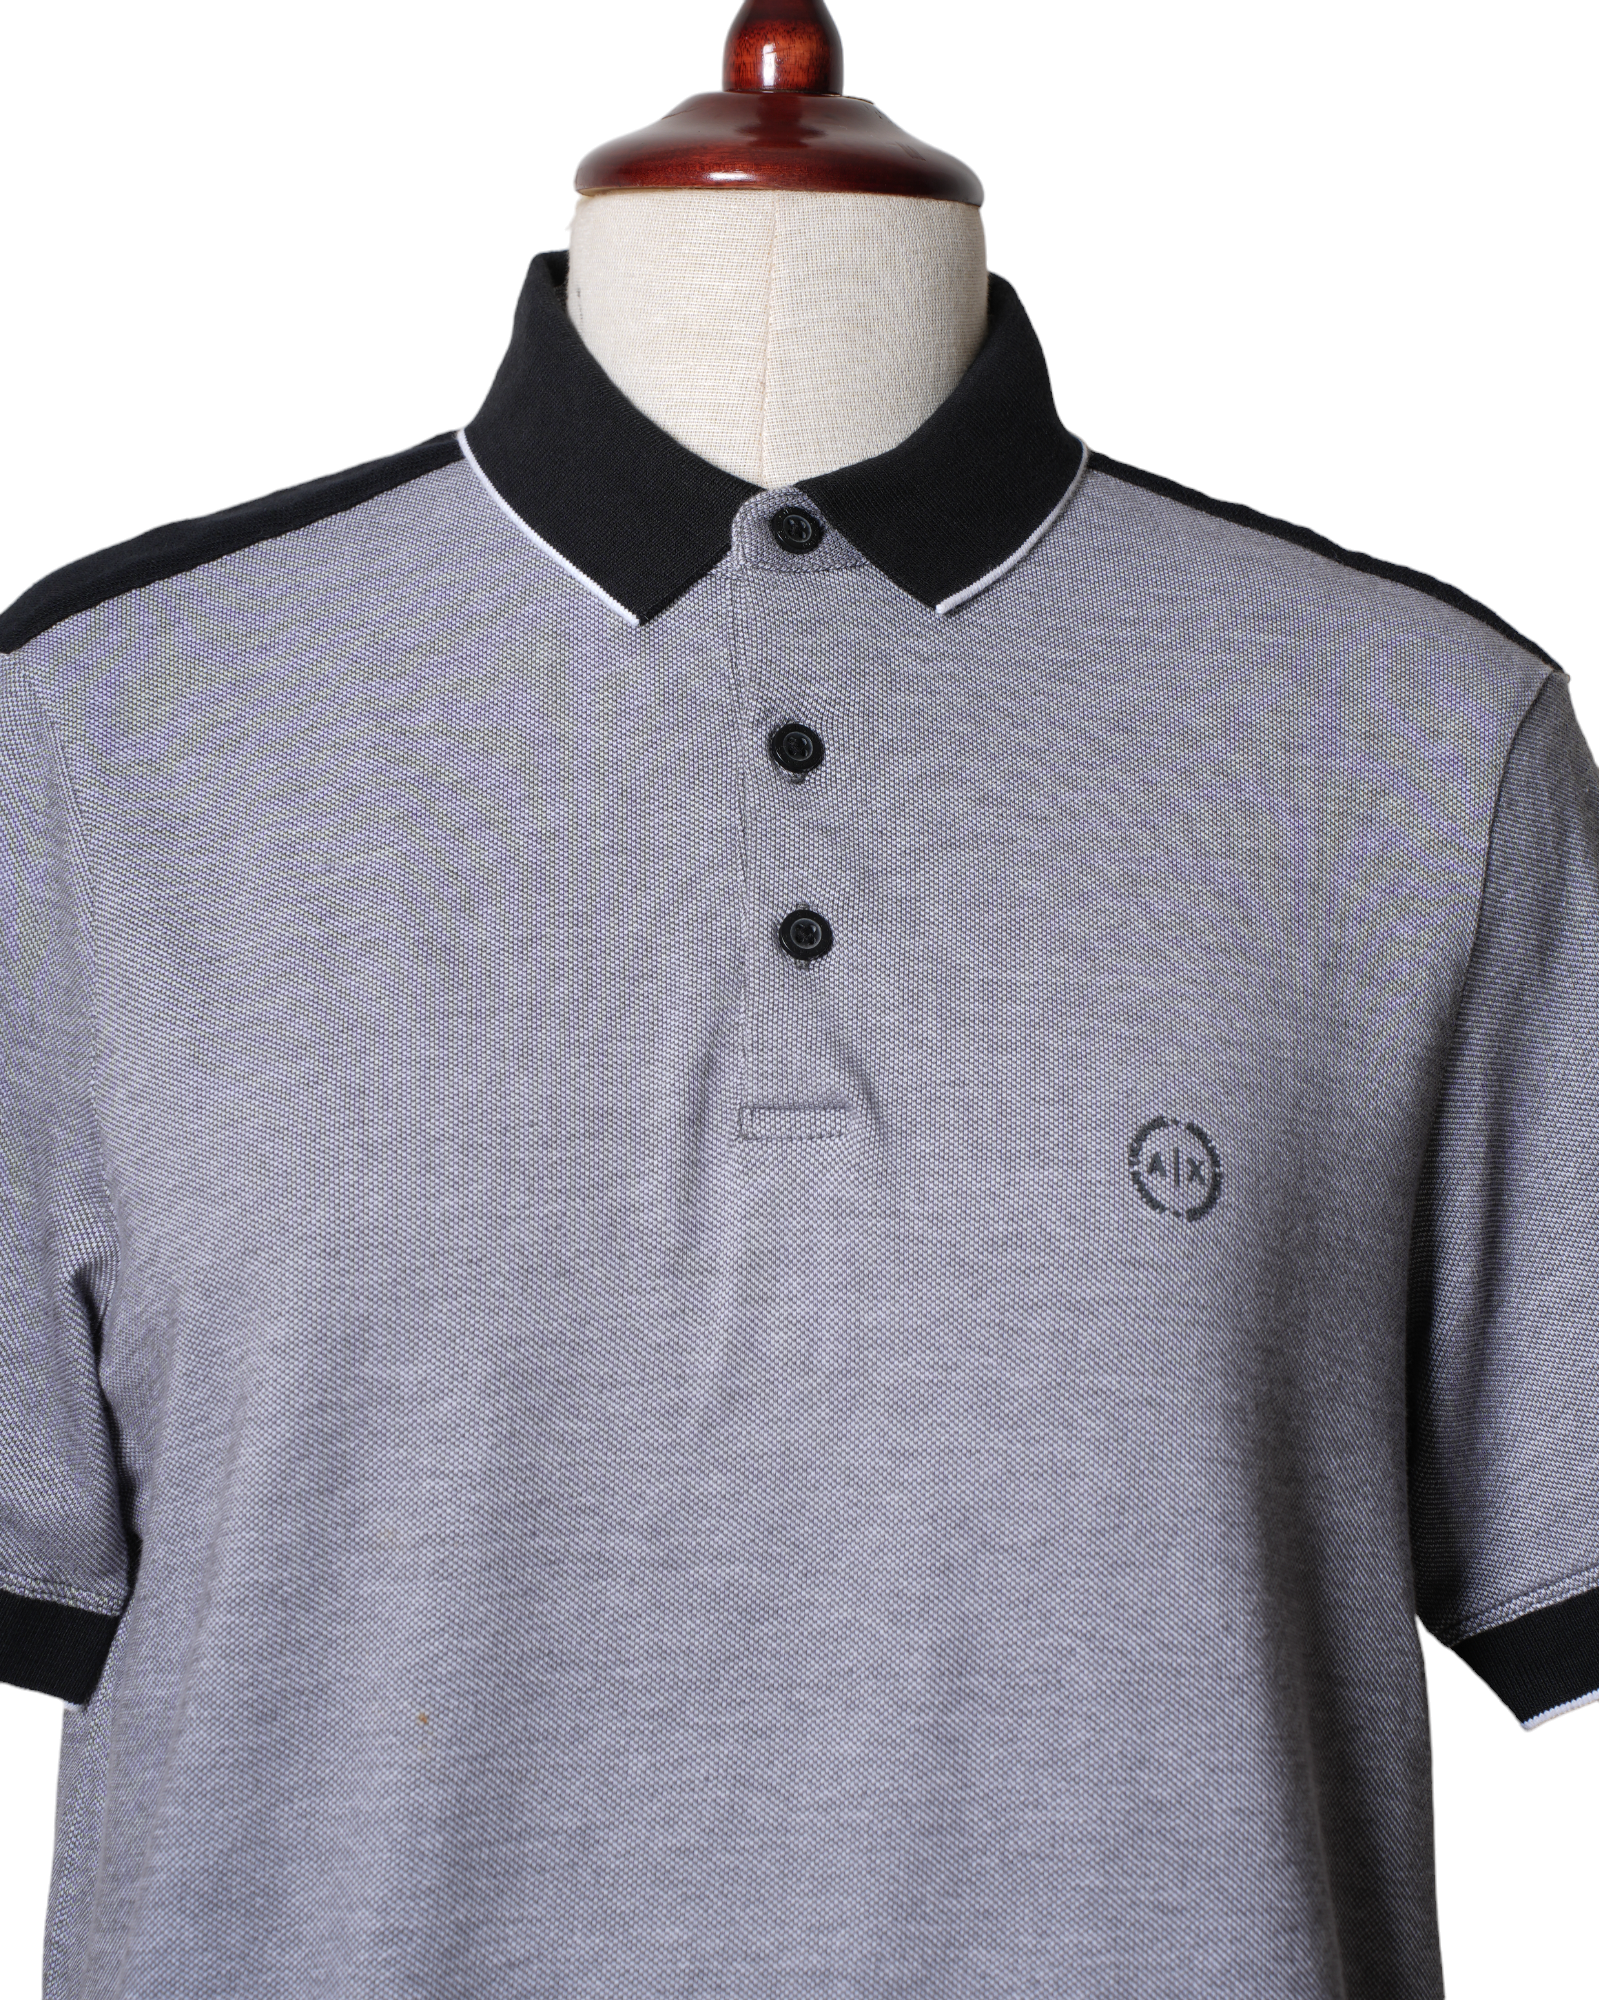 Armani Exchange Grey & Black T-shirt